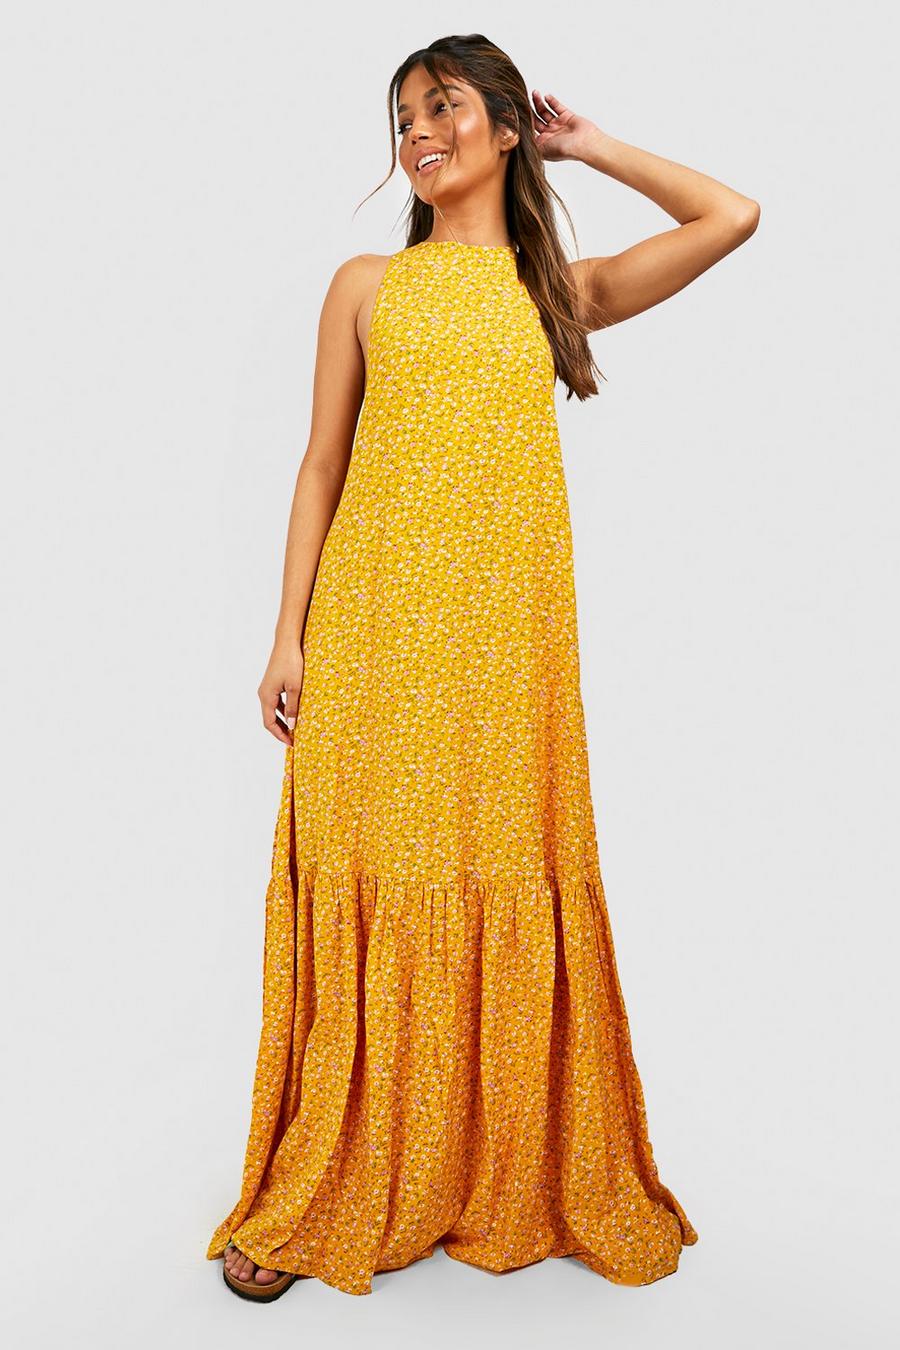 Mustard yellow Woven Dalmatian Print Smock Dress